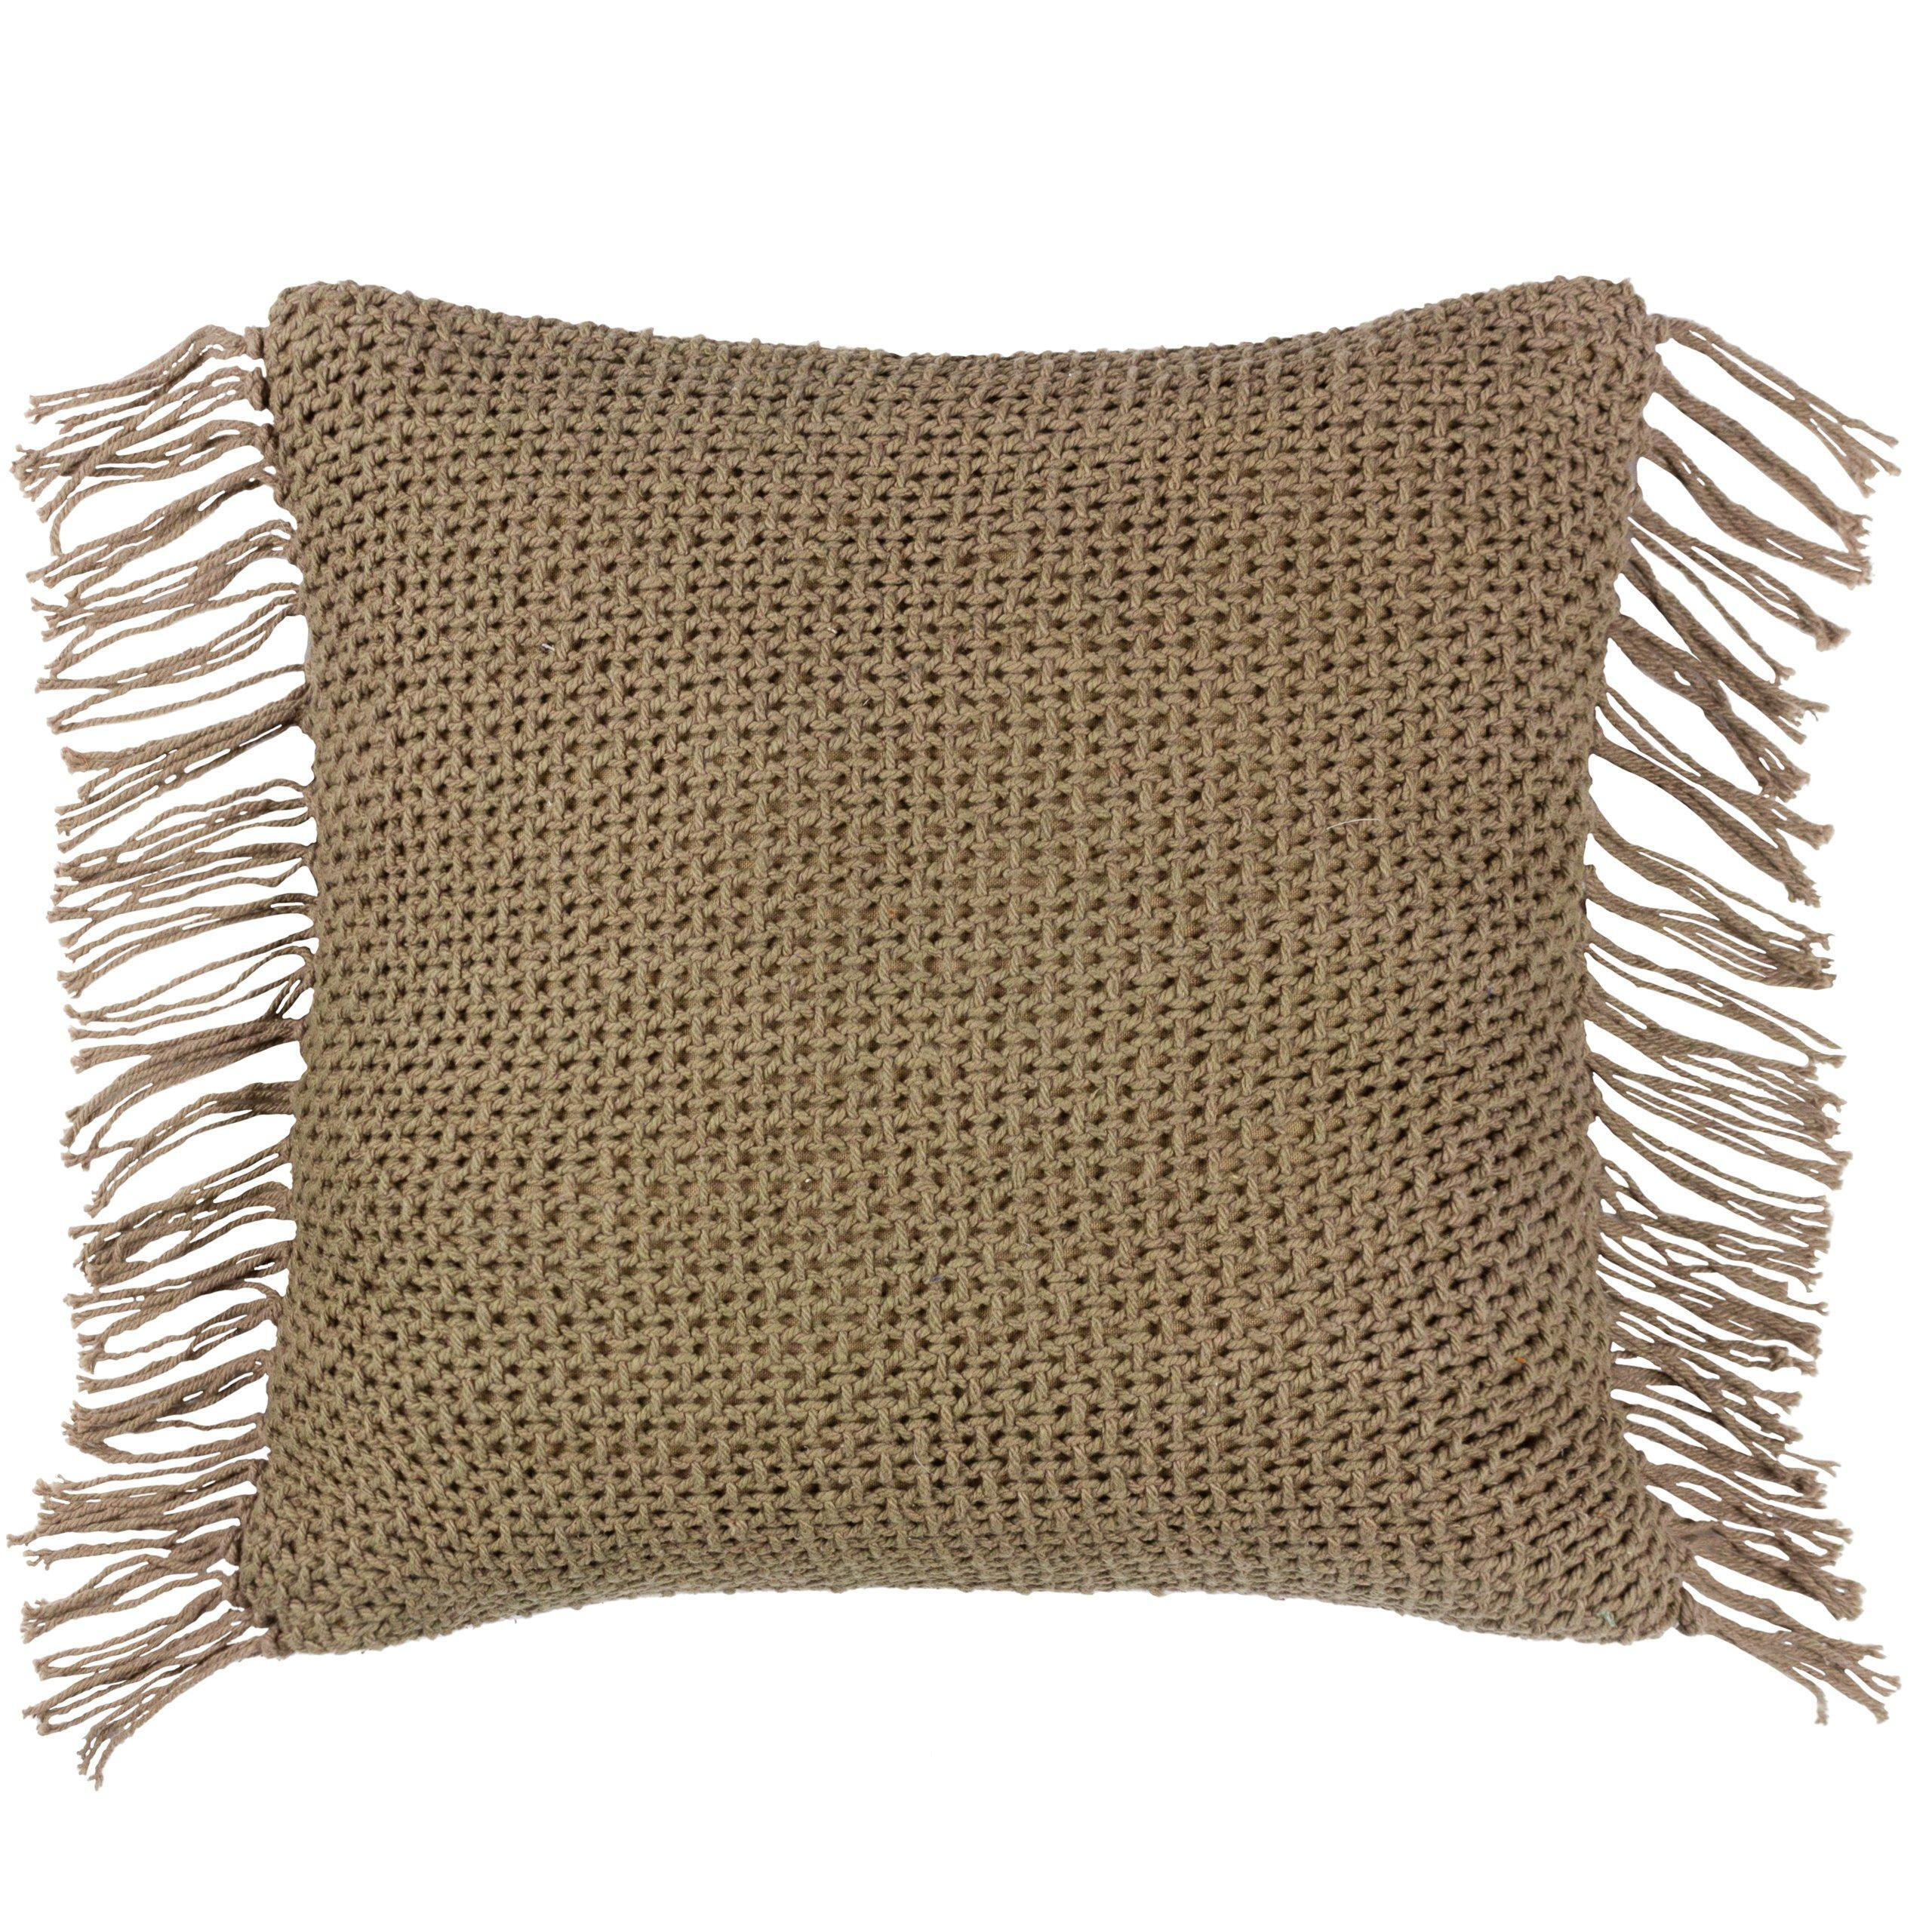 Nimble Woven Cushion - image 1